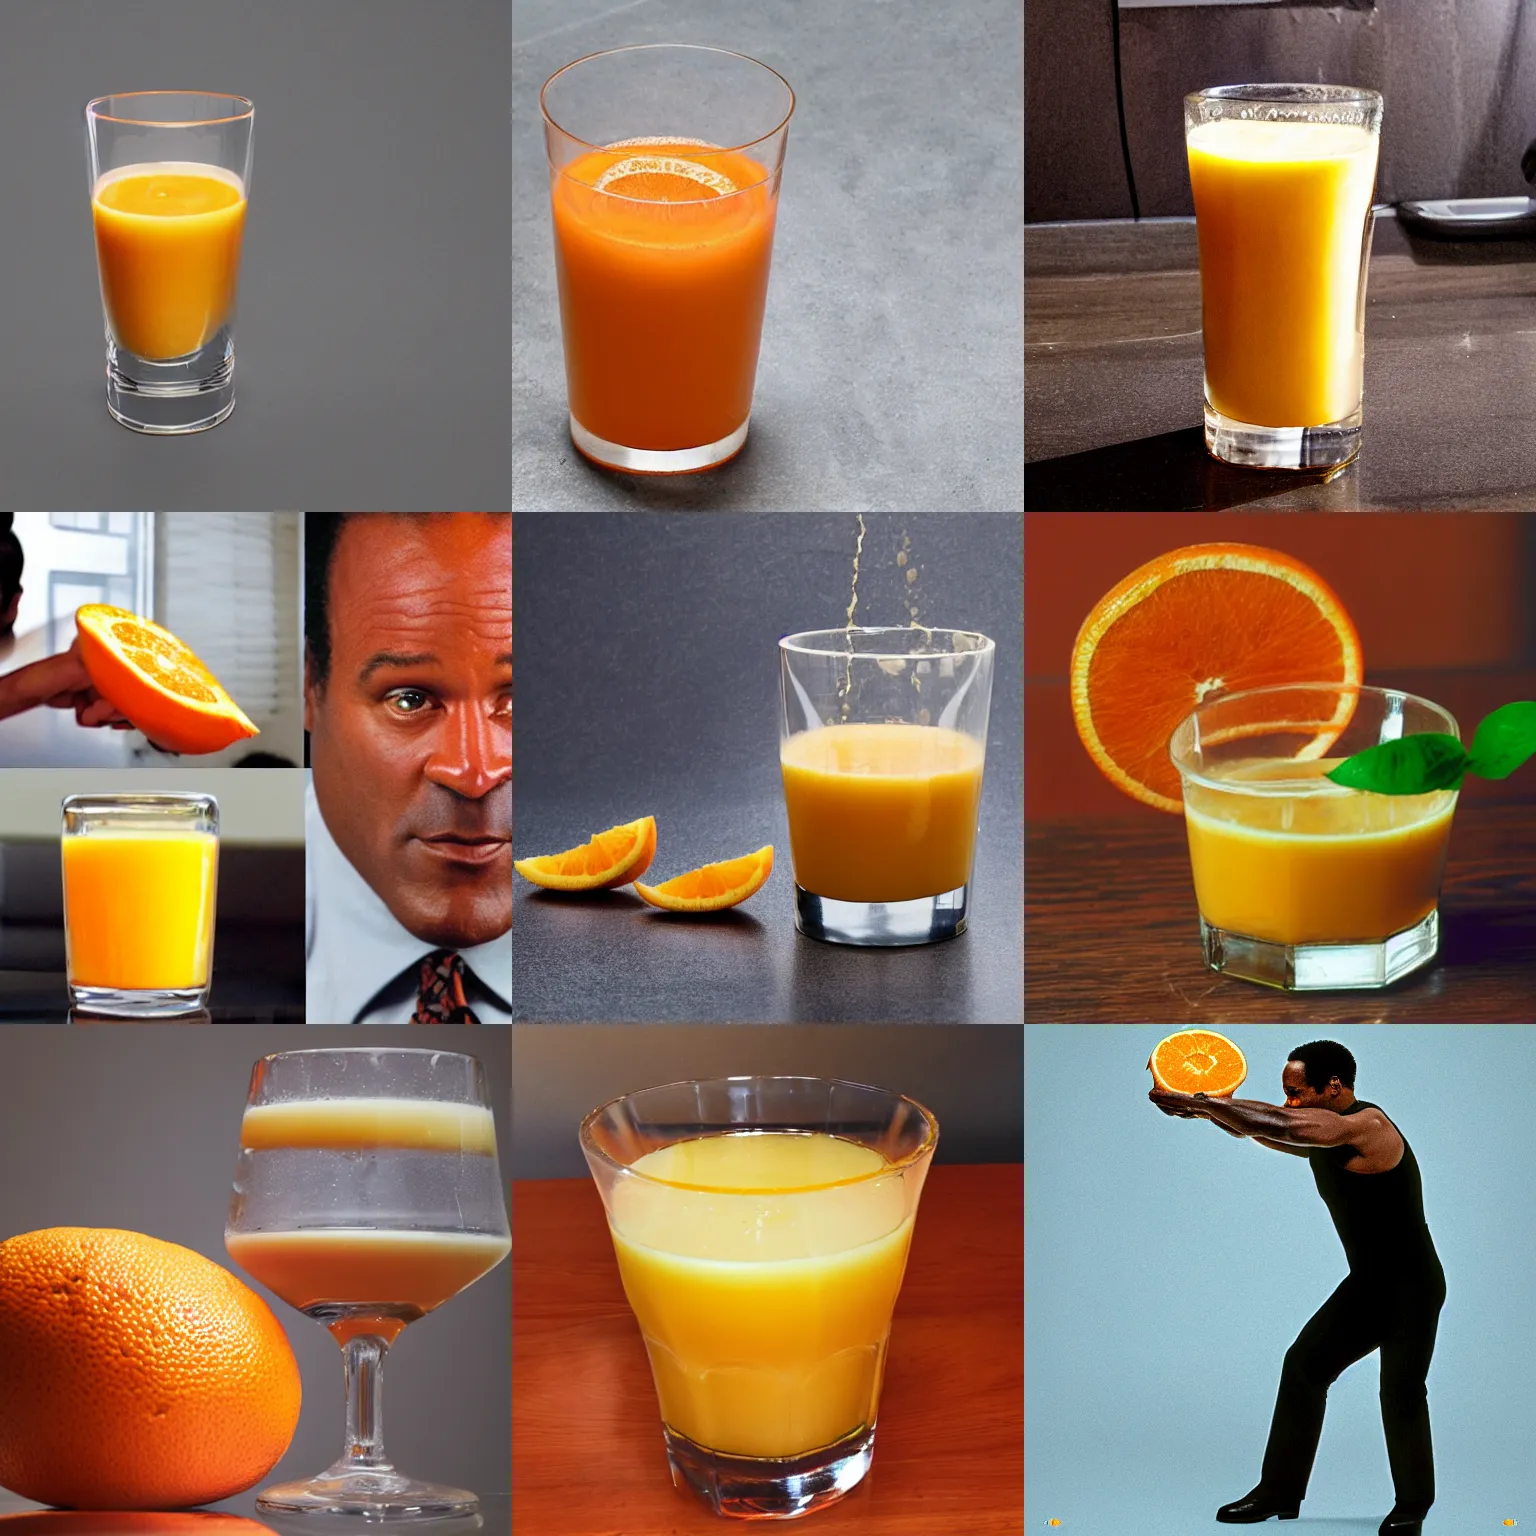 Prompt: ( shrunk down o j simpson ) stuck inside [ stuck inside ] [ a glass of orange juice ]